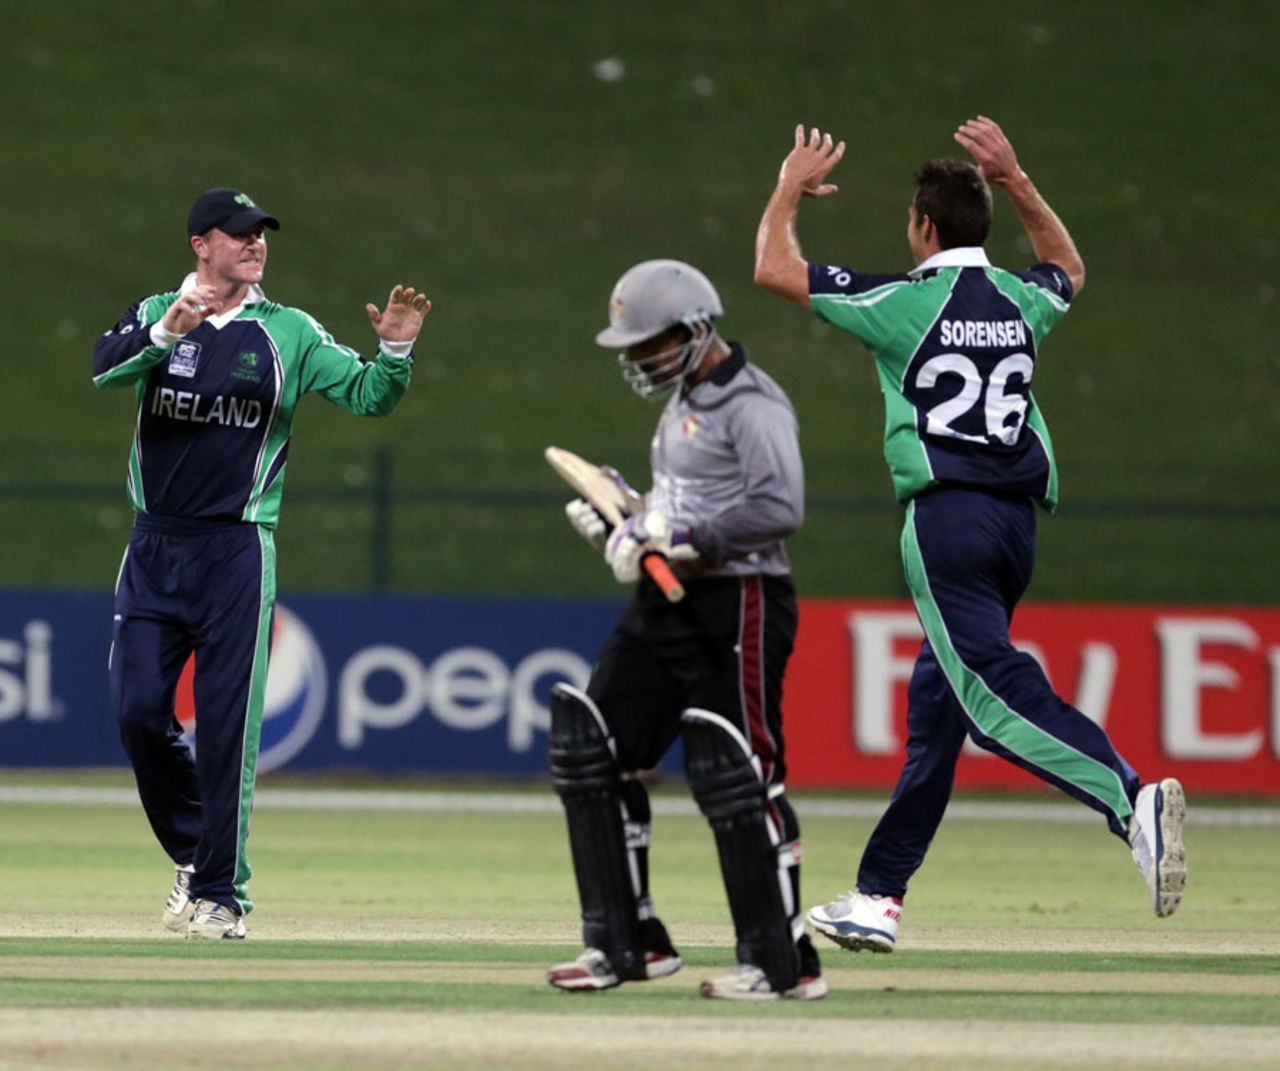 Max Sorensen picked up four wickets, Ireland v UAE, ICC World T20 Qualifier, 2nd semi-final, Abu Dhabi, November 29, 2013